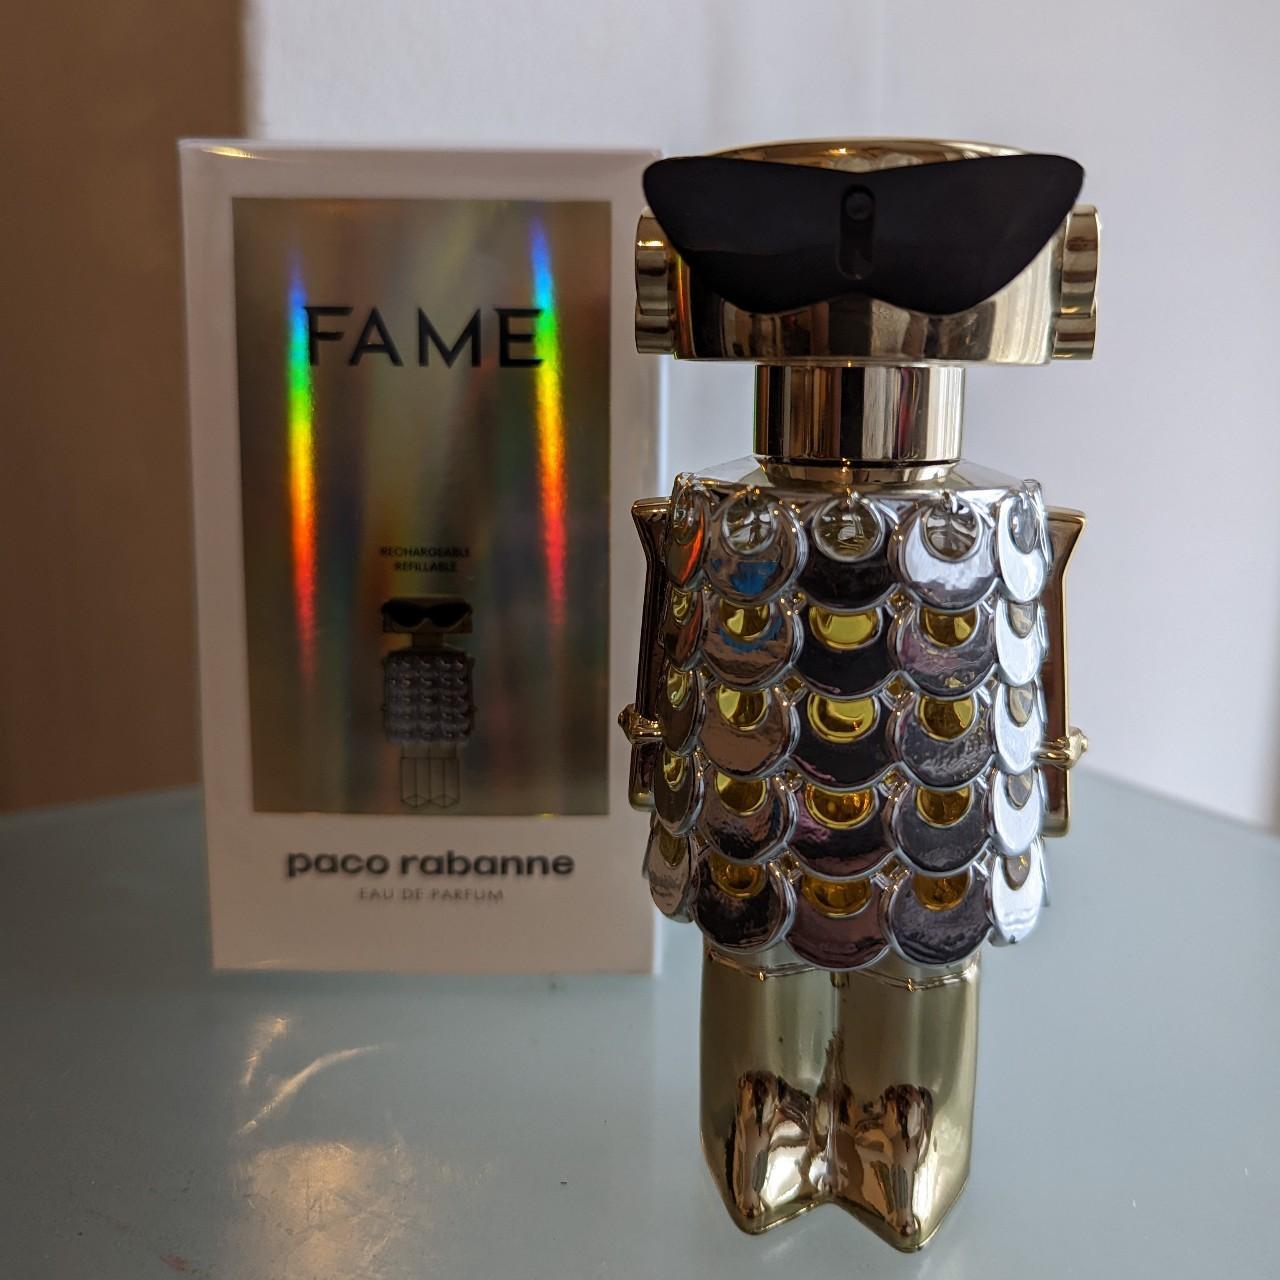 Paco Rabanne Game Eau de Parfum 50ml Brand... - Depop